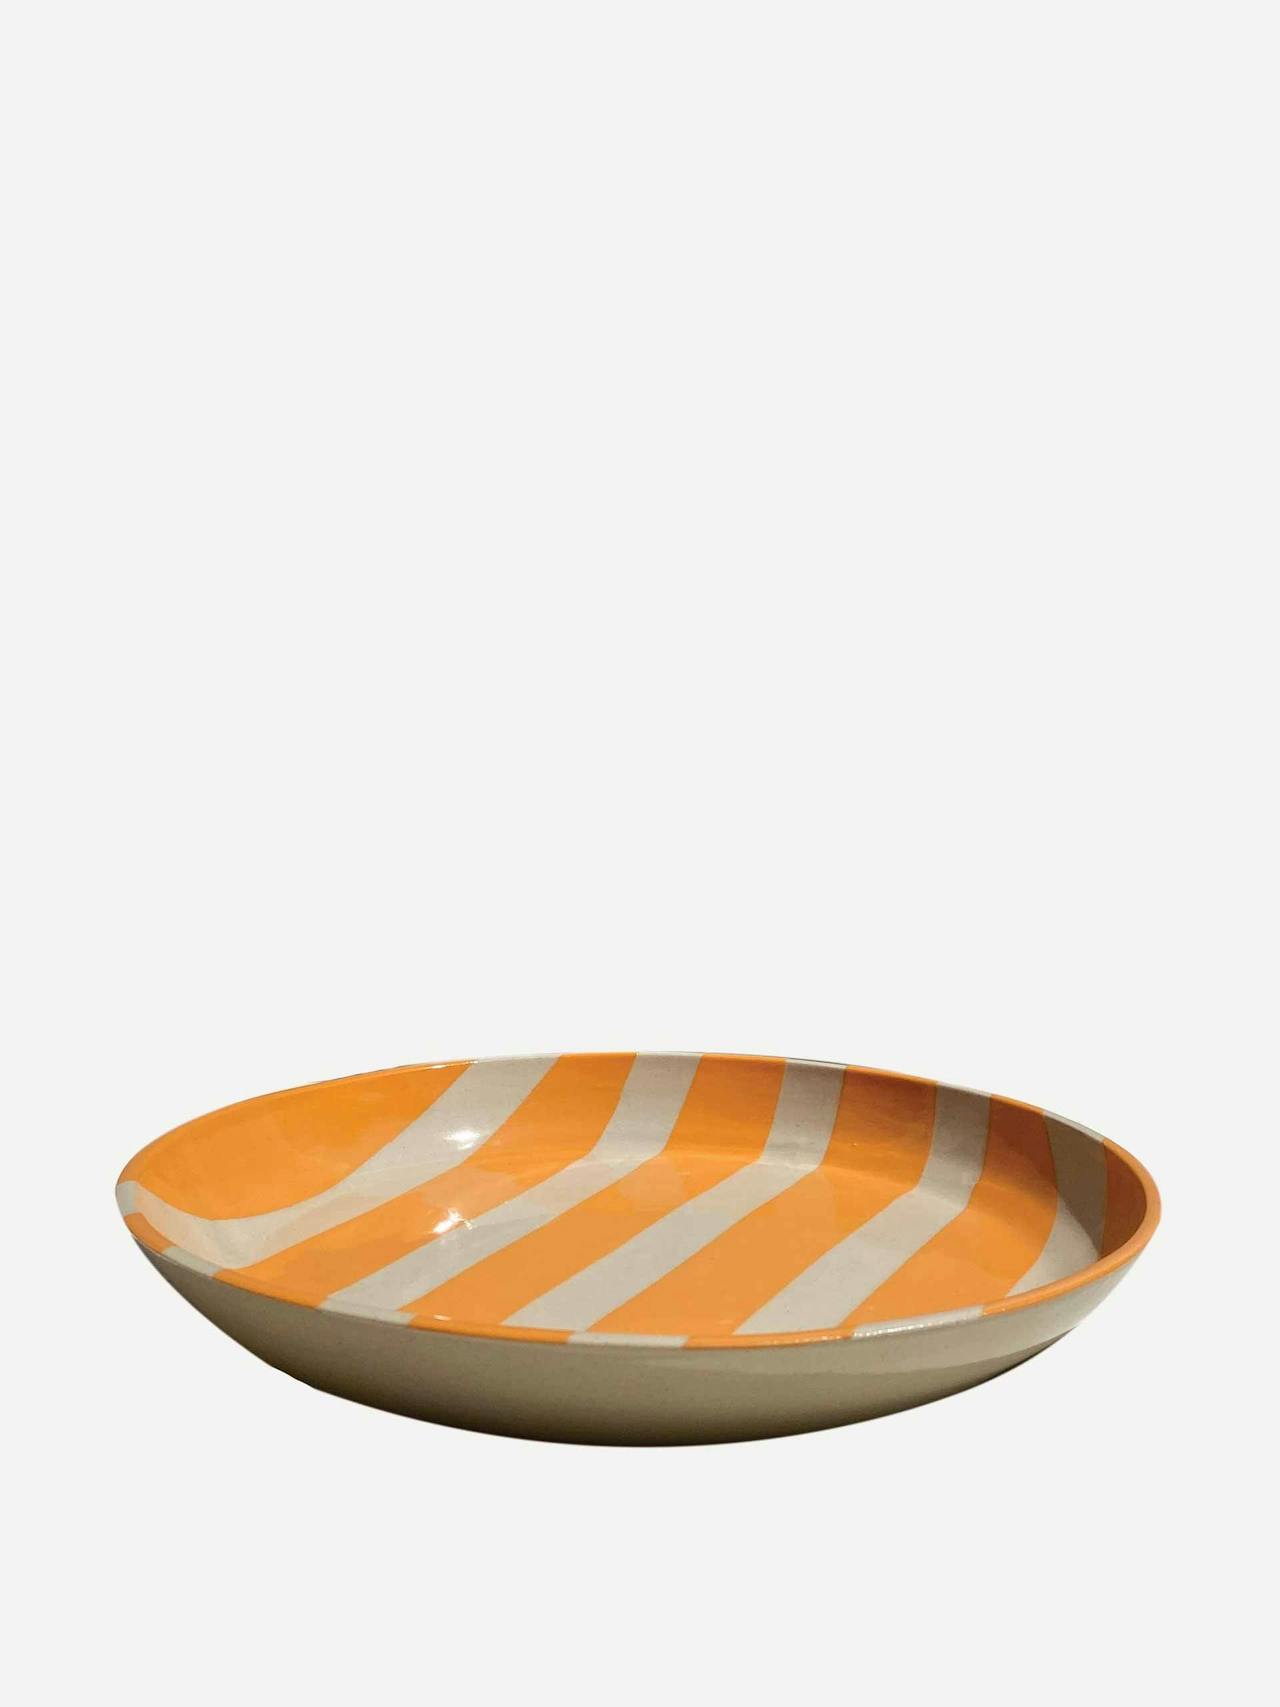 Duci striped bowl in orange